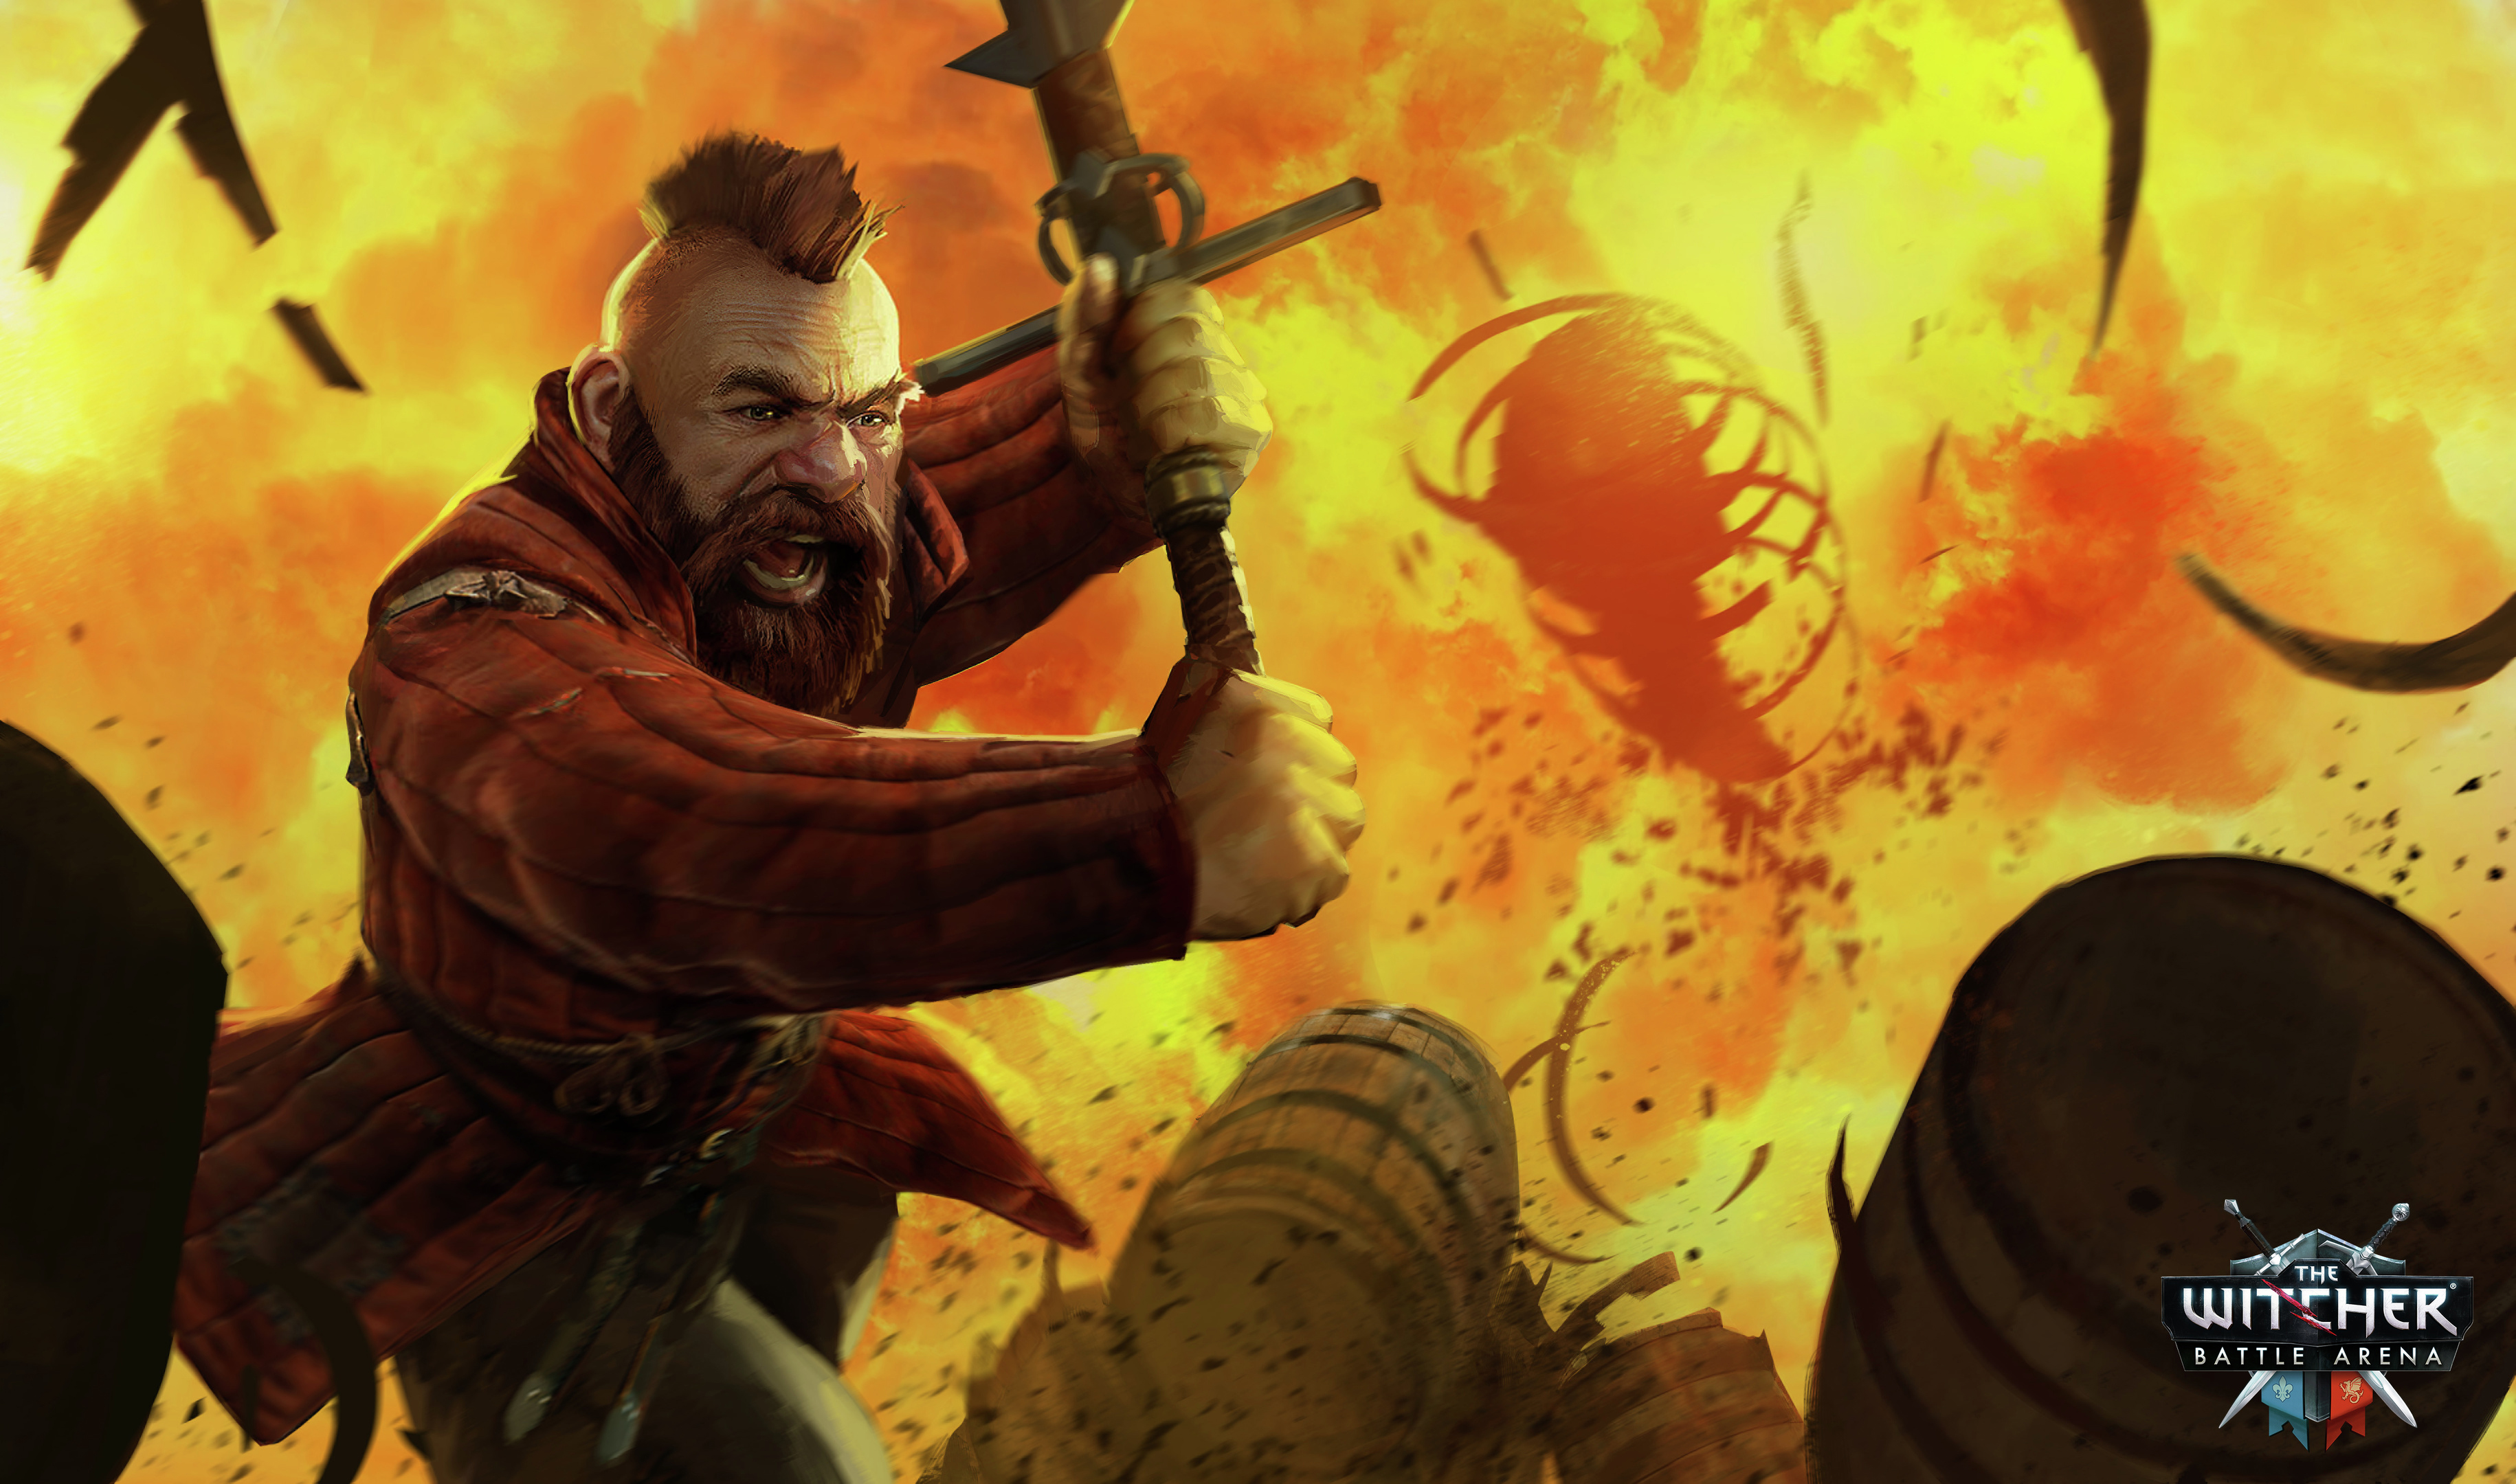  The Witcher: Battle Arena Desktop Wallpaper